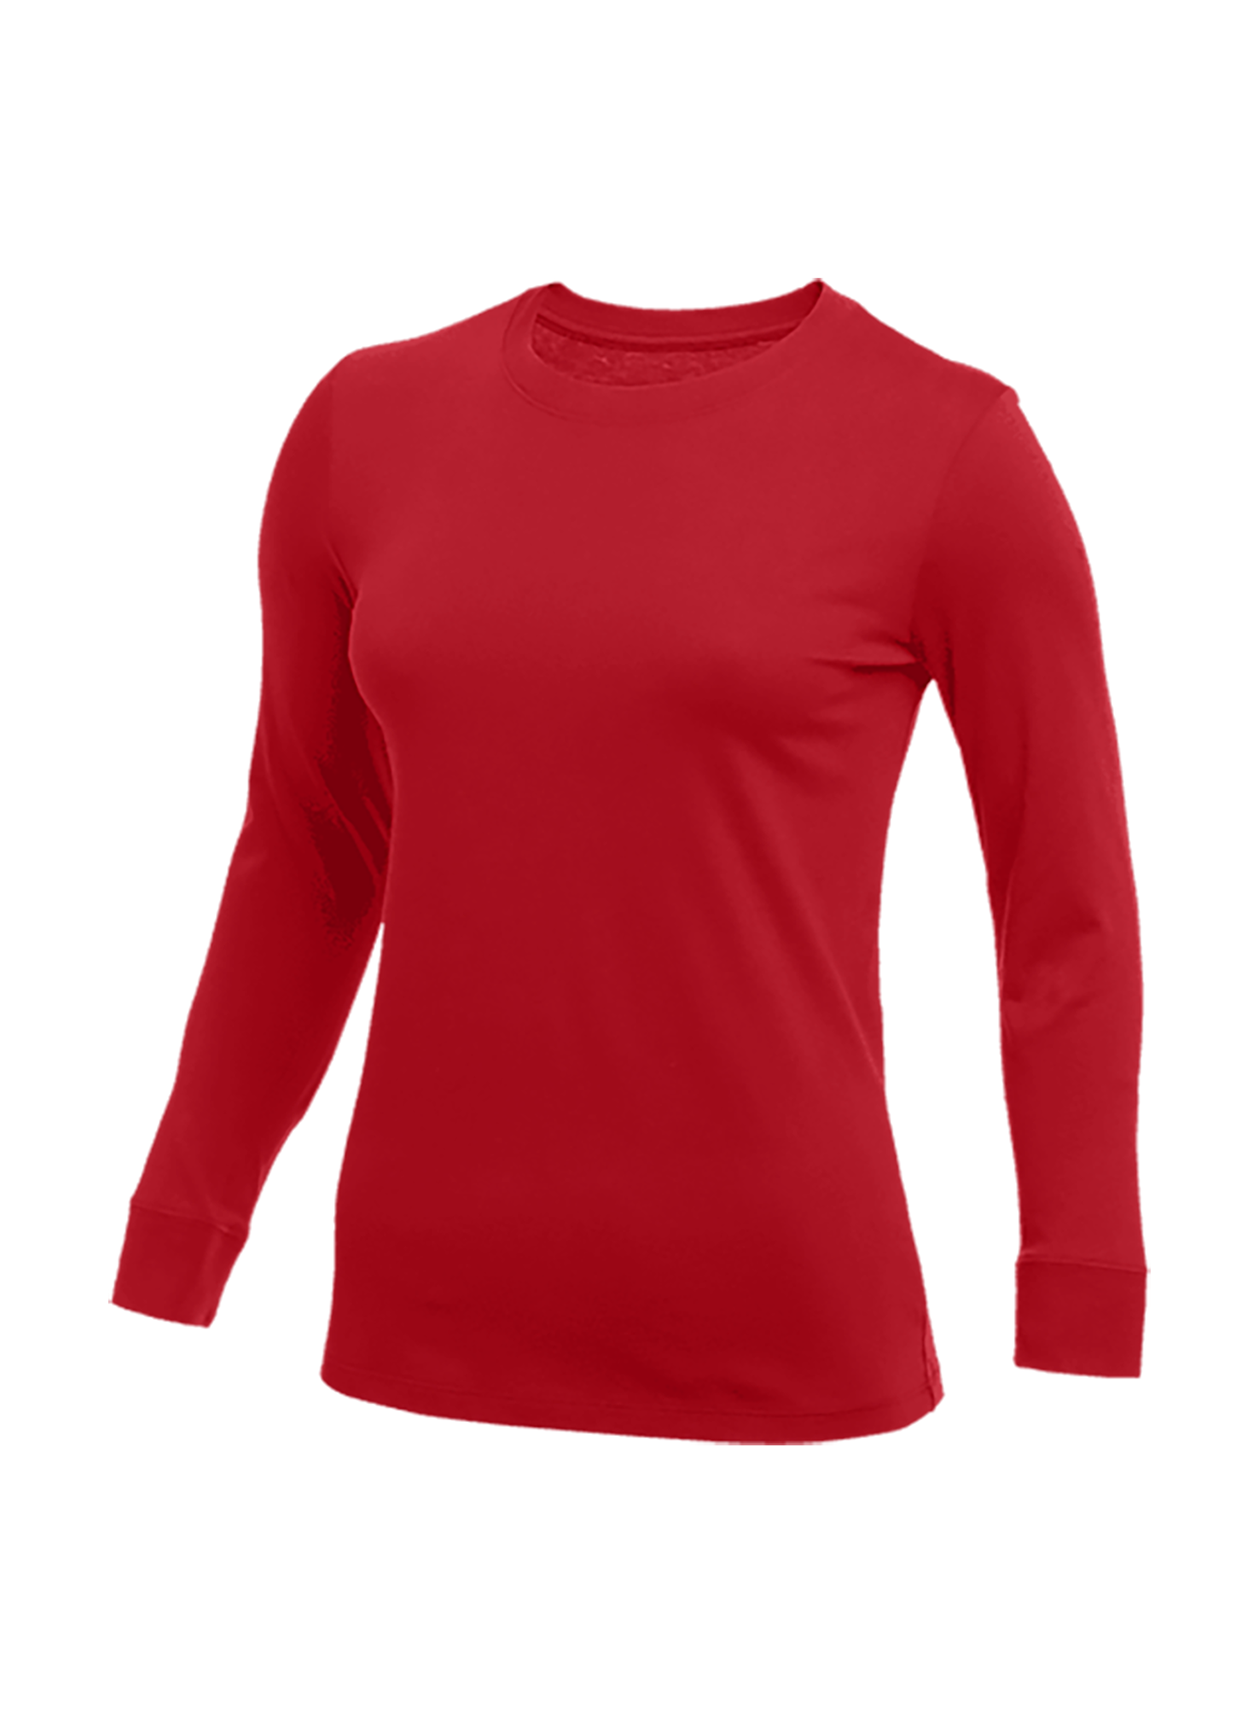 Nike Women's University Red Long-Sleeve T-Shirt